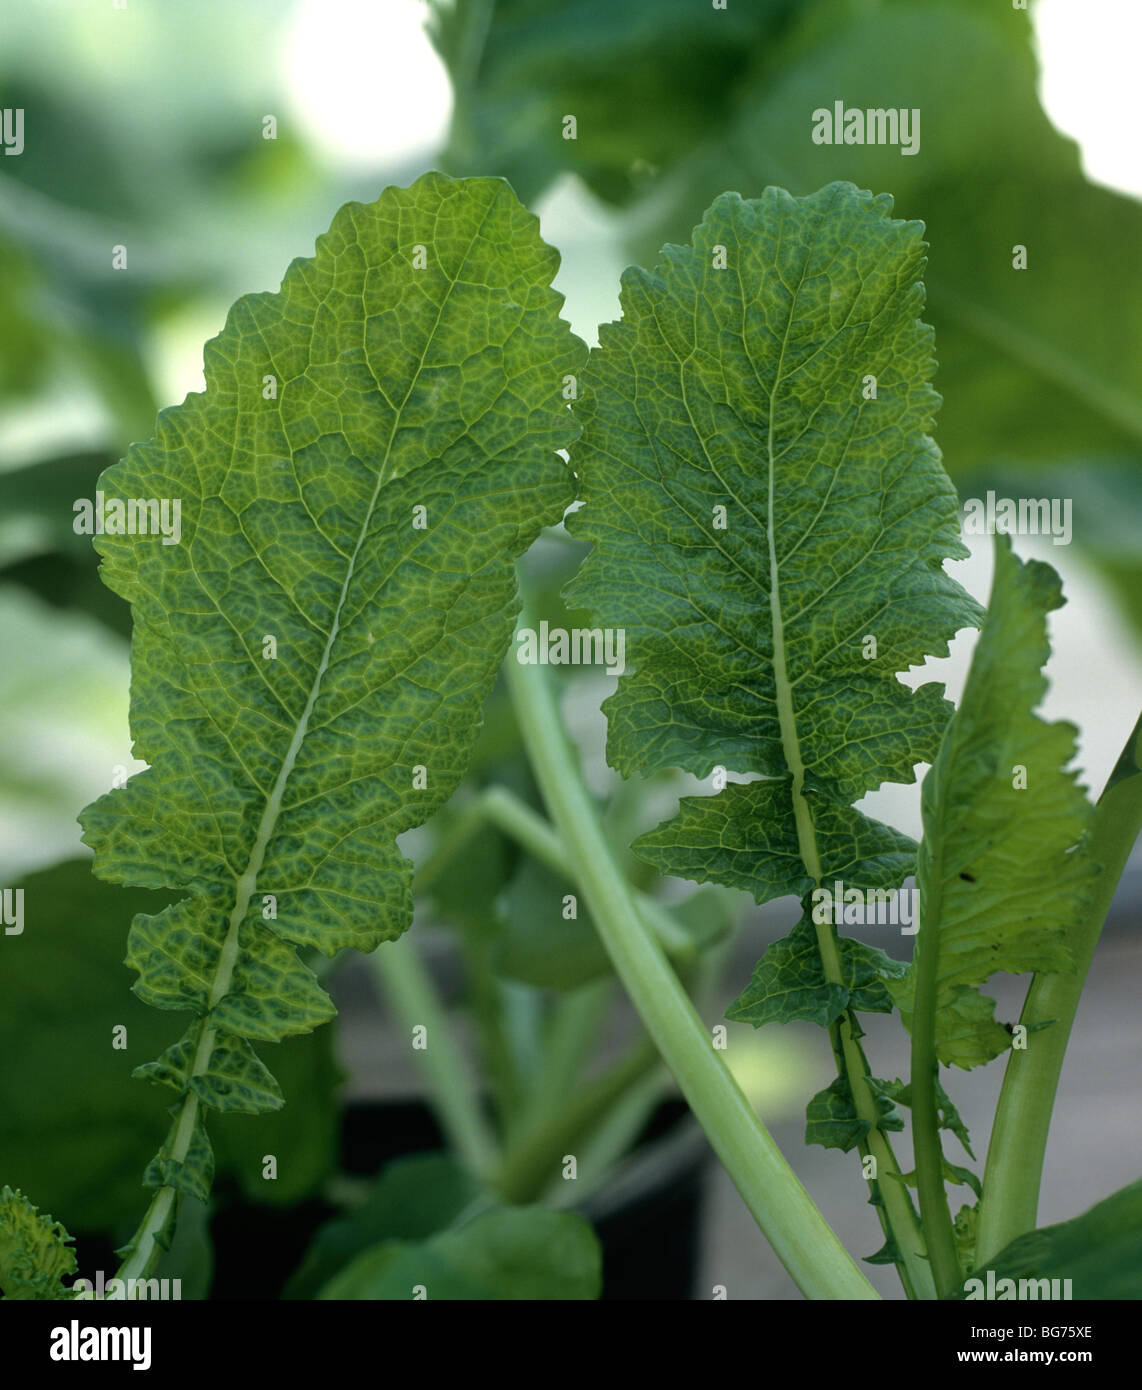 Cauliflower mosaic virus infection chlorotic netted symptoms on turnip leaves Stock Photo